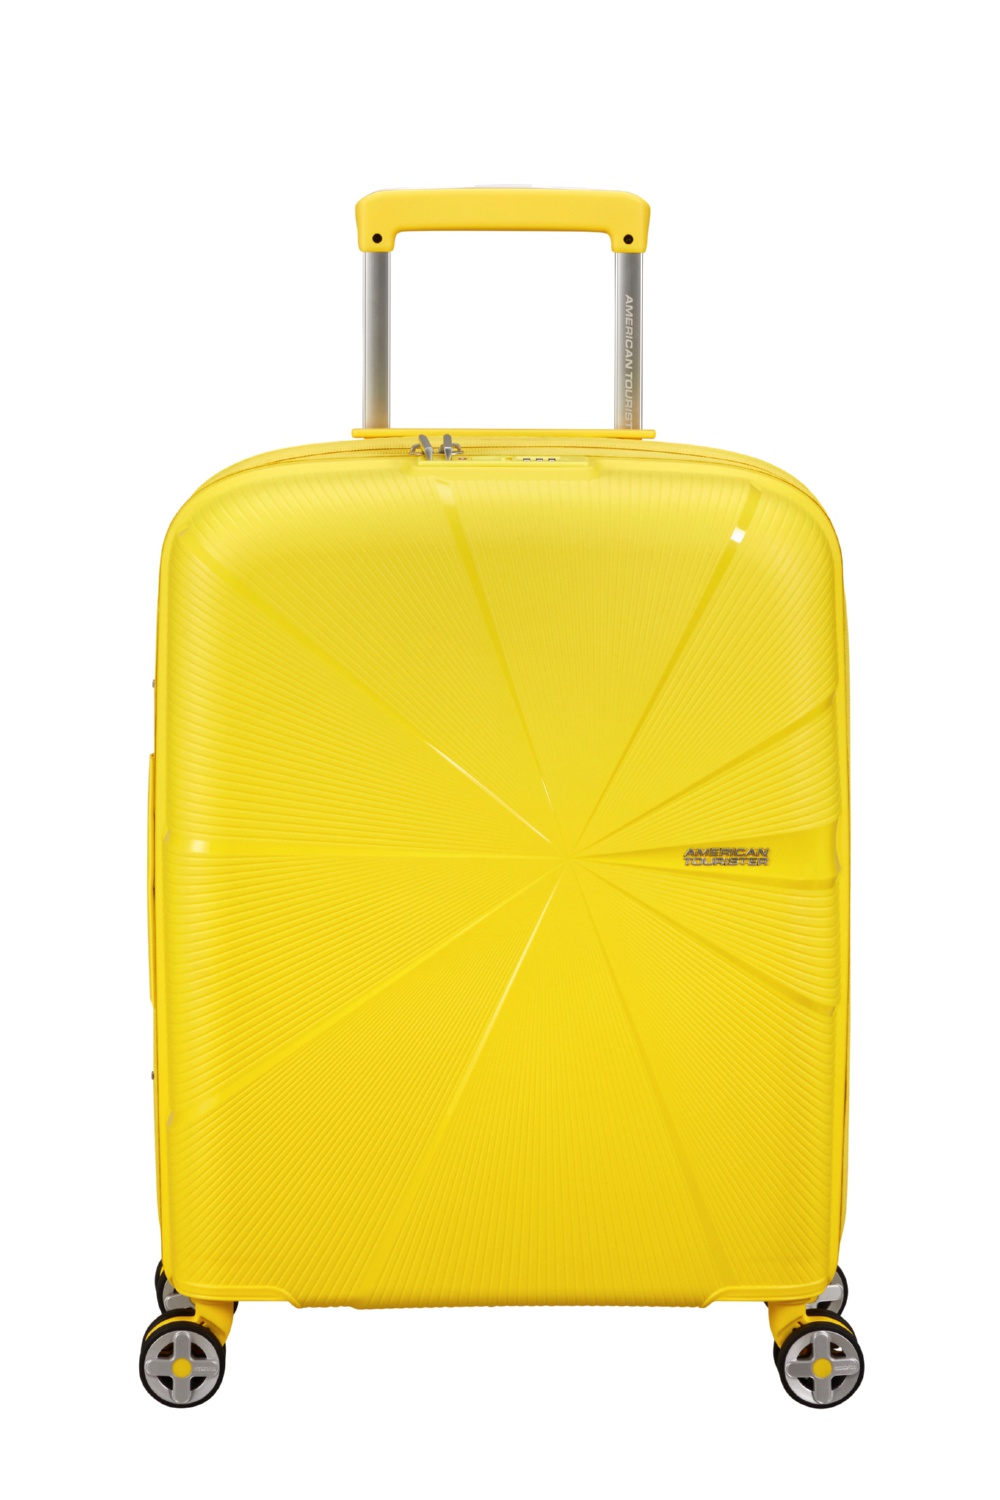 Валіза American Tourister Starvibe MD5*06002 маленька жовта з розширенням